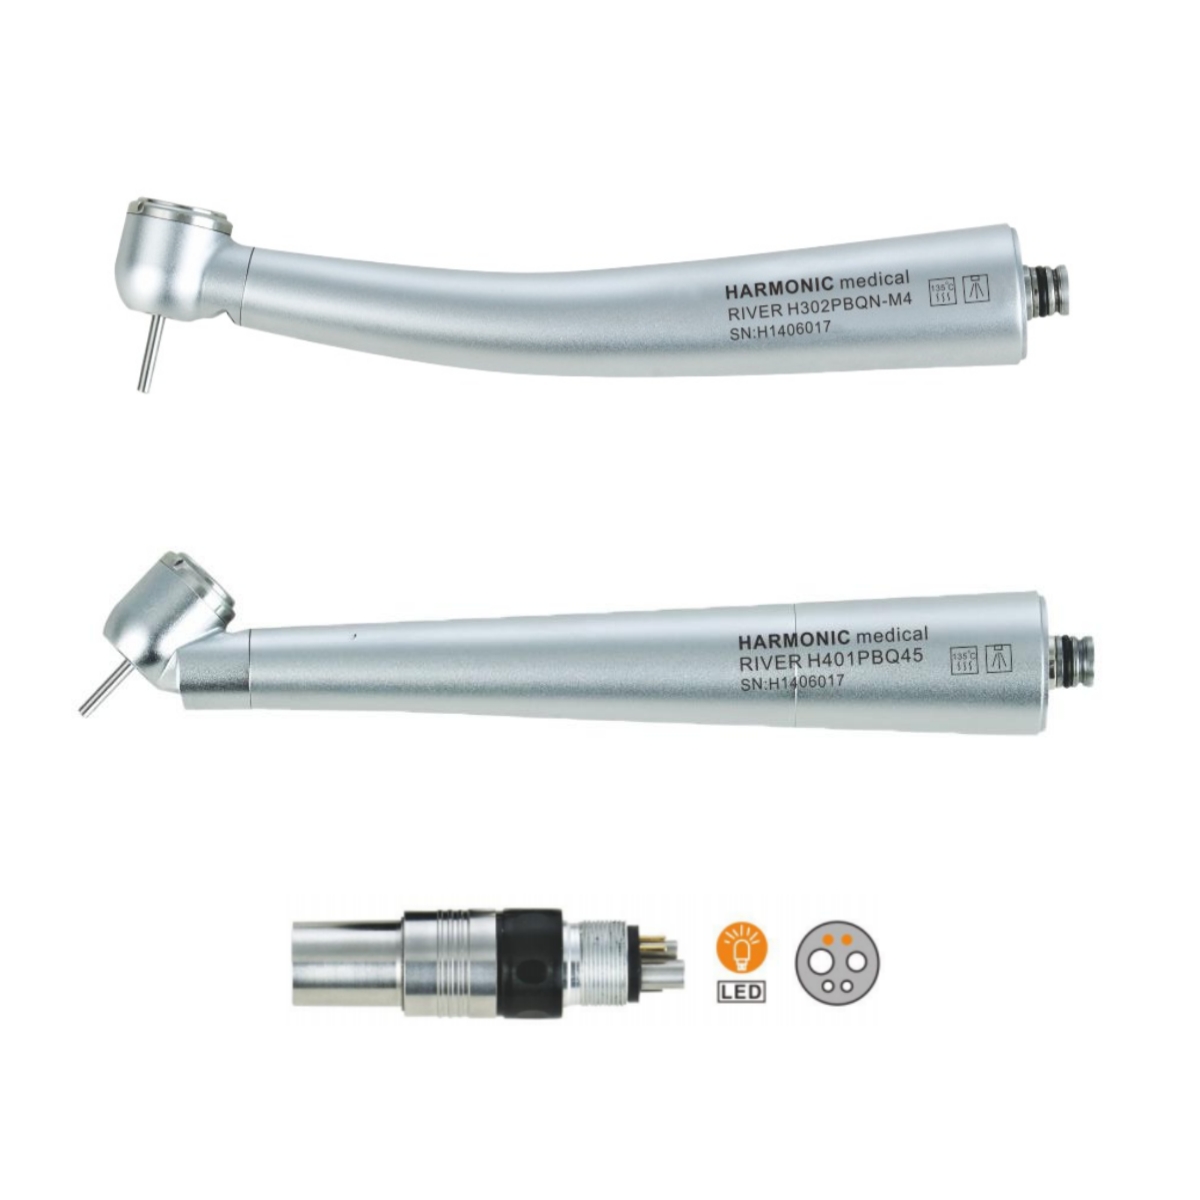 NSK coupling handpieces dental series